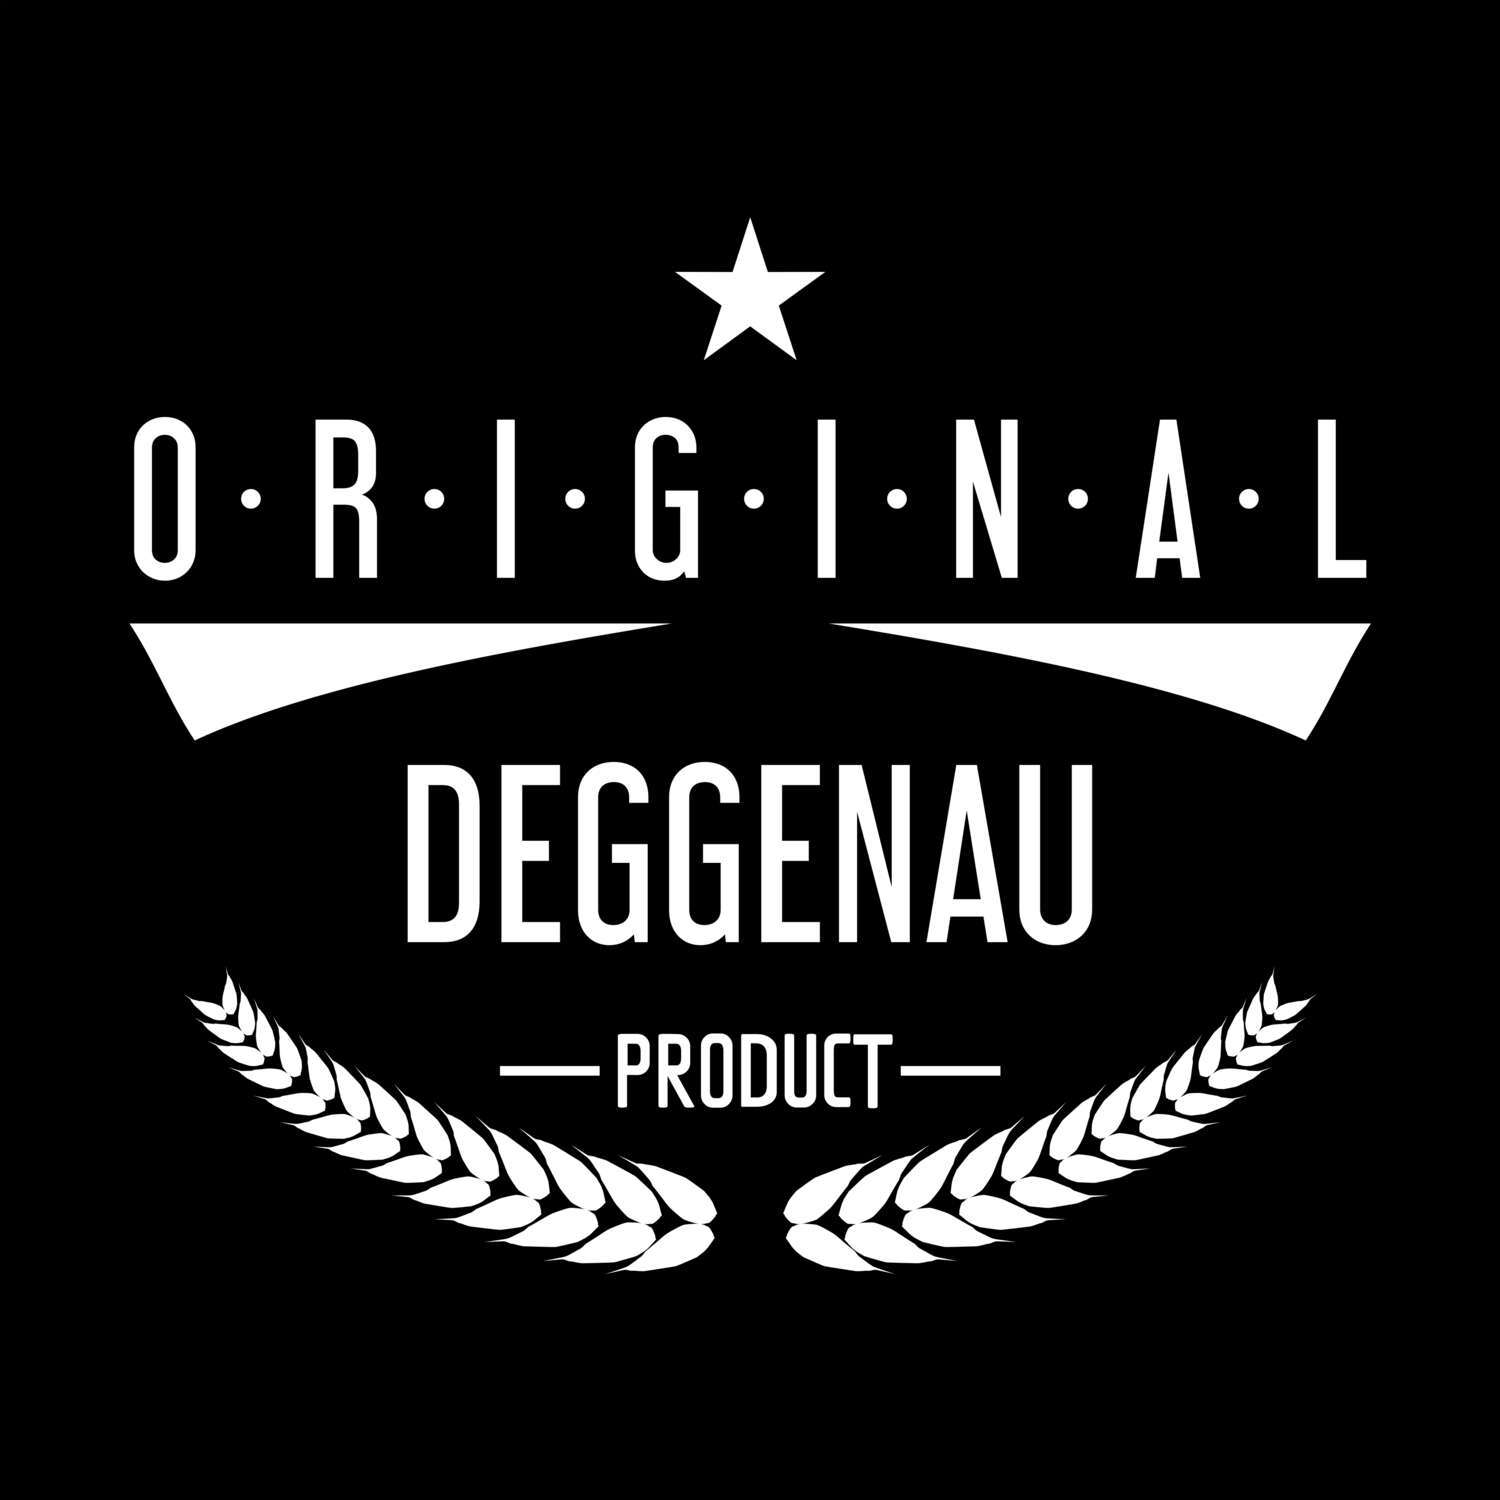 Deggenau T-Shirt »Original Product«